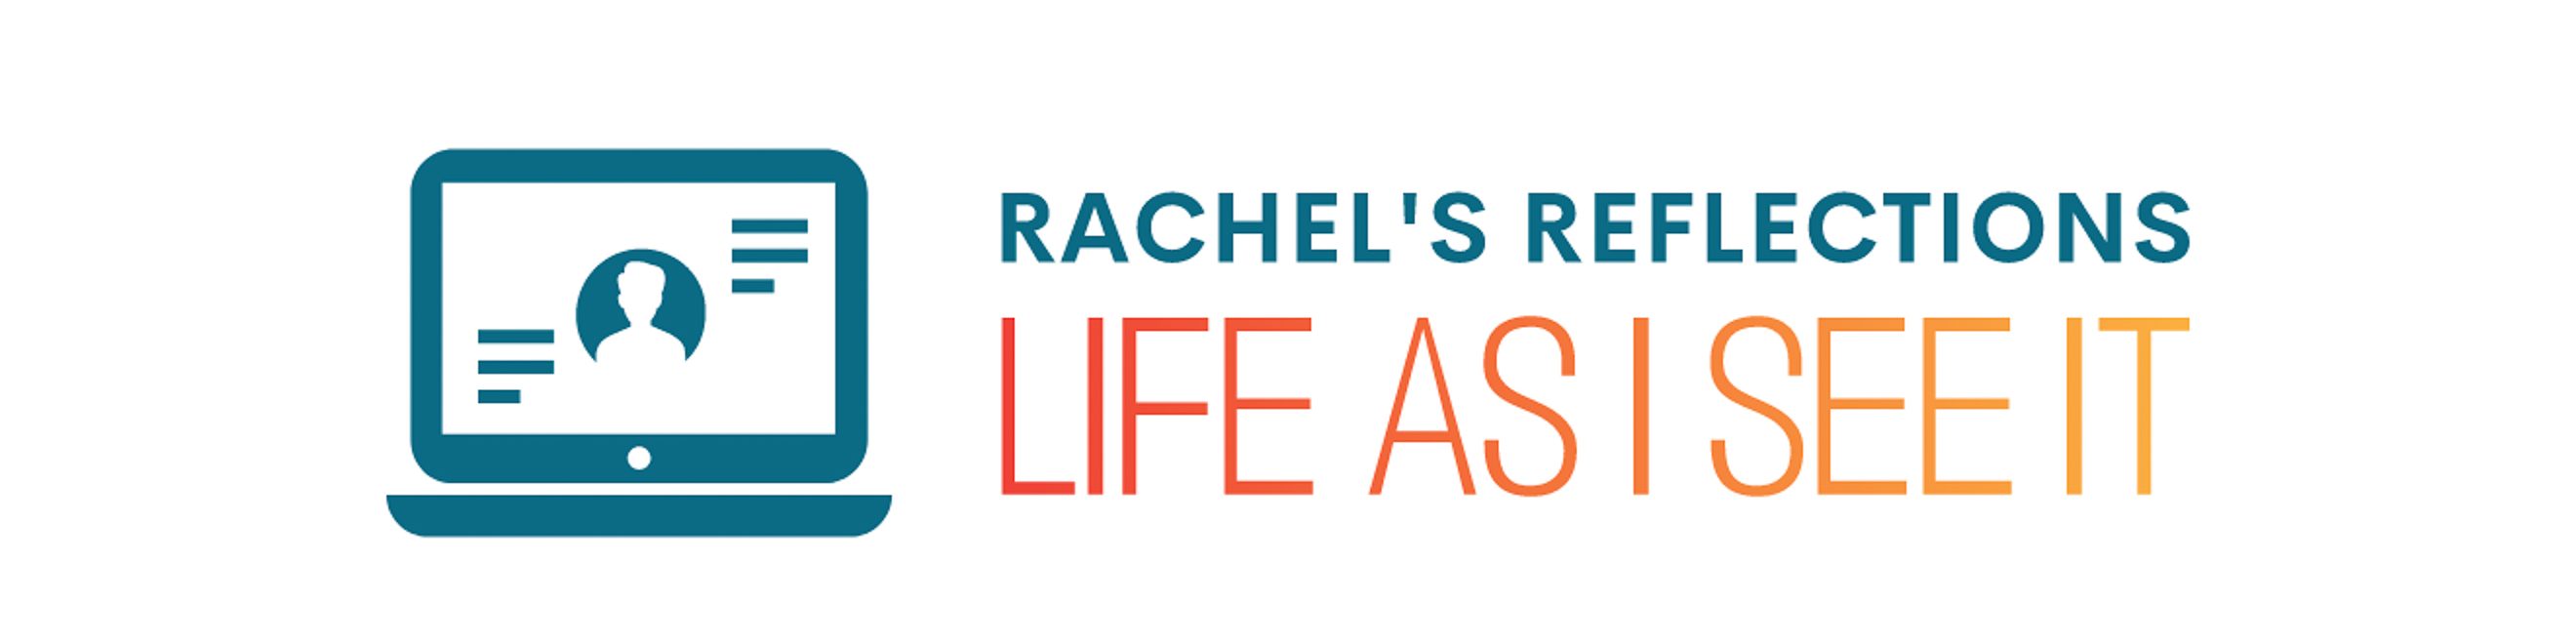 Rachel's Reflections